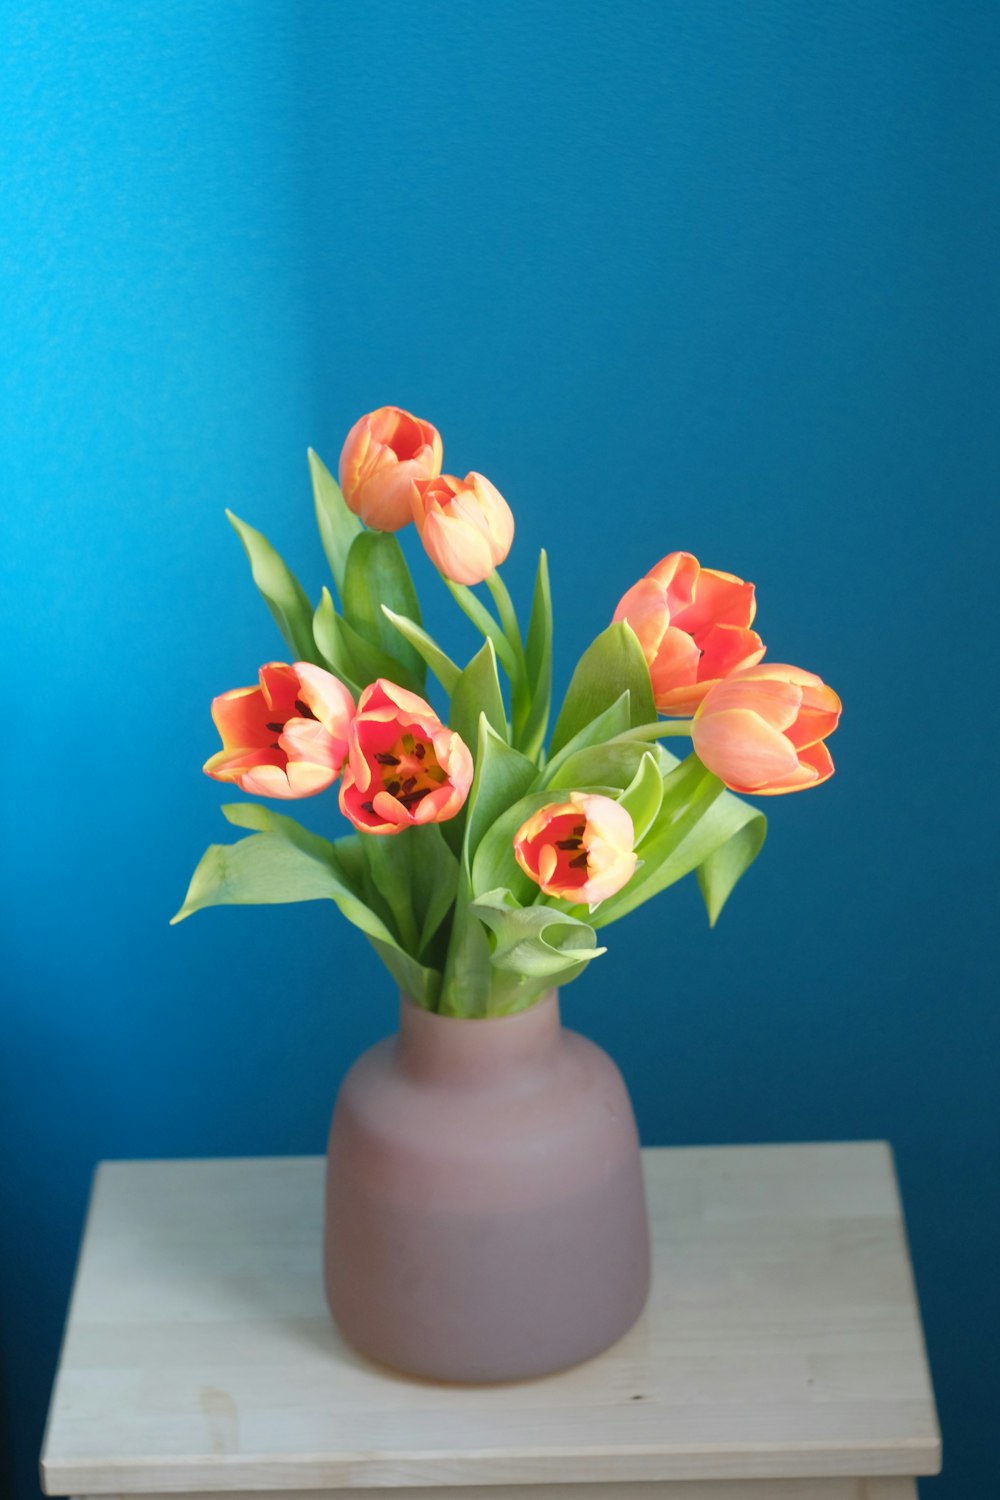 red and white tulips in white ceramic vase